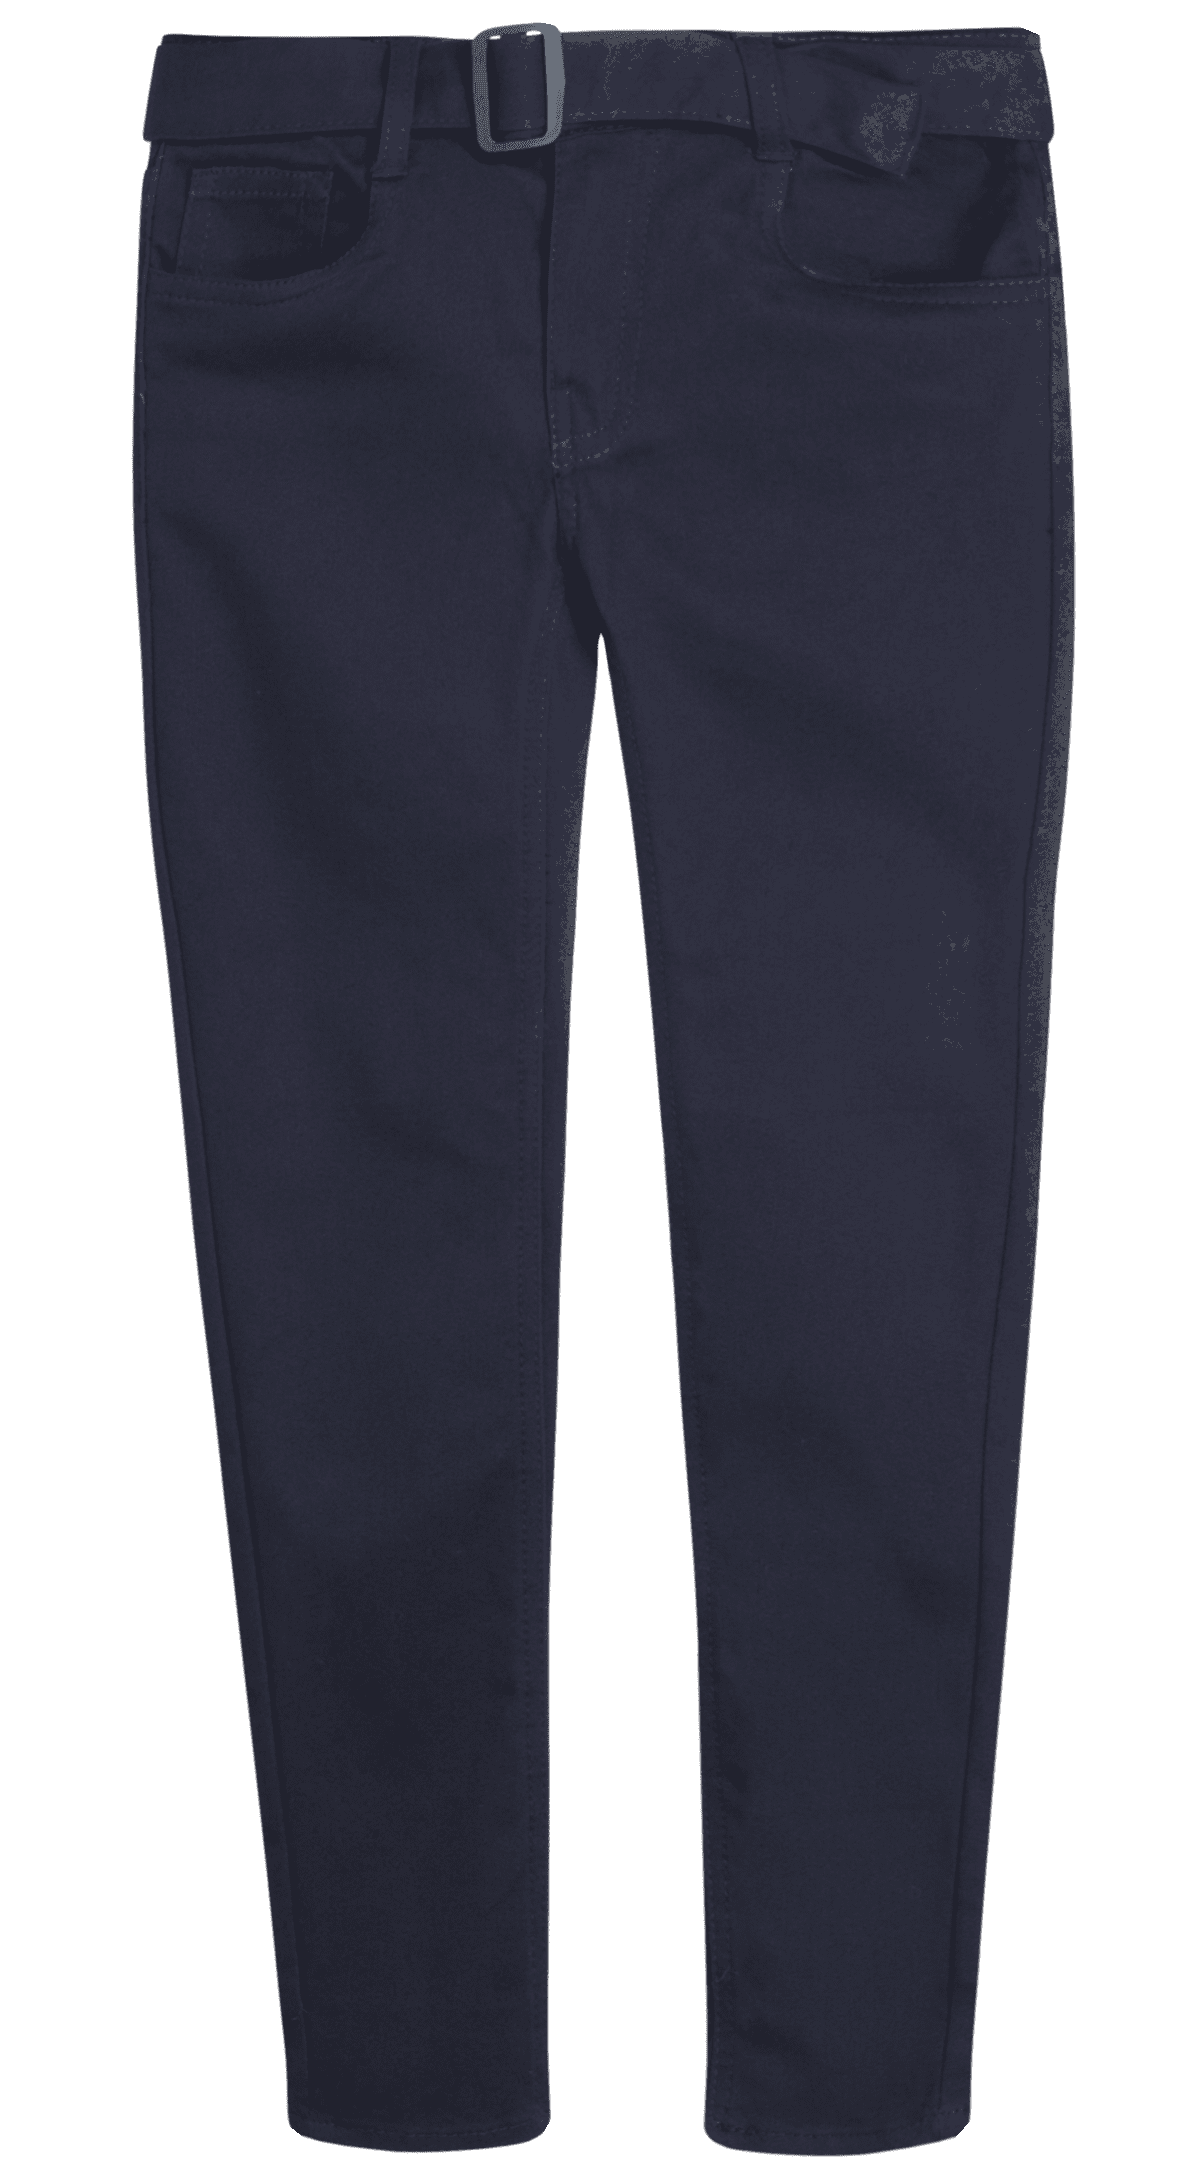 Update more than 87 navy blue skinny uniform pants latest - in.eteachers